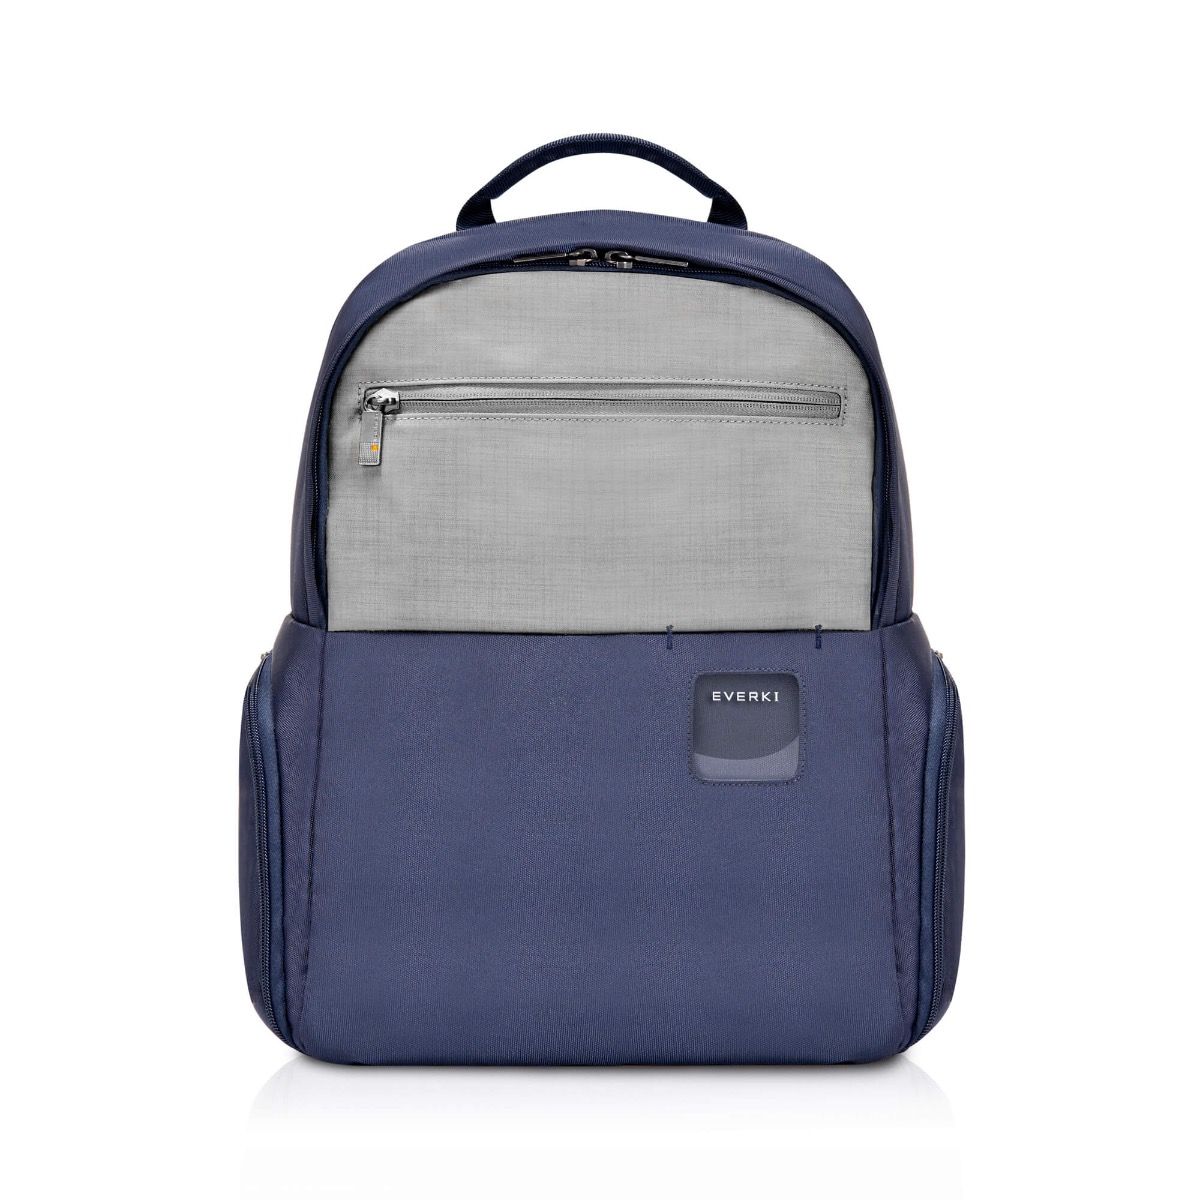  ContemPRO Commuter Laptop Backpack - 15.6" Navy Blue  